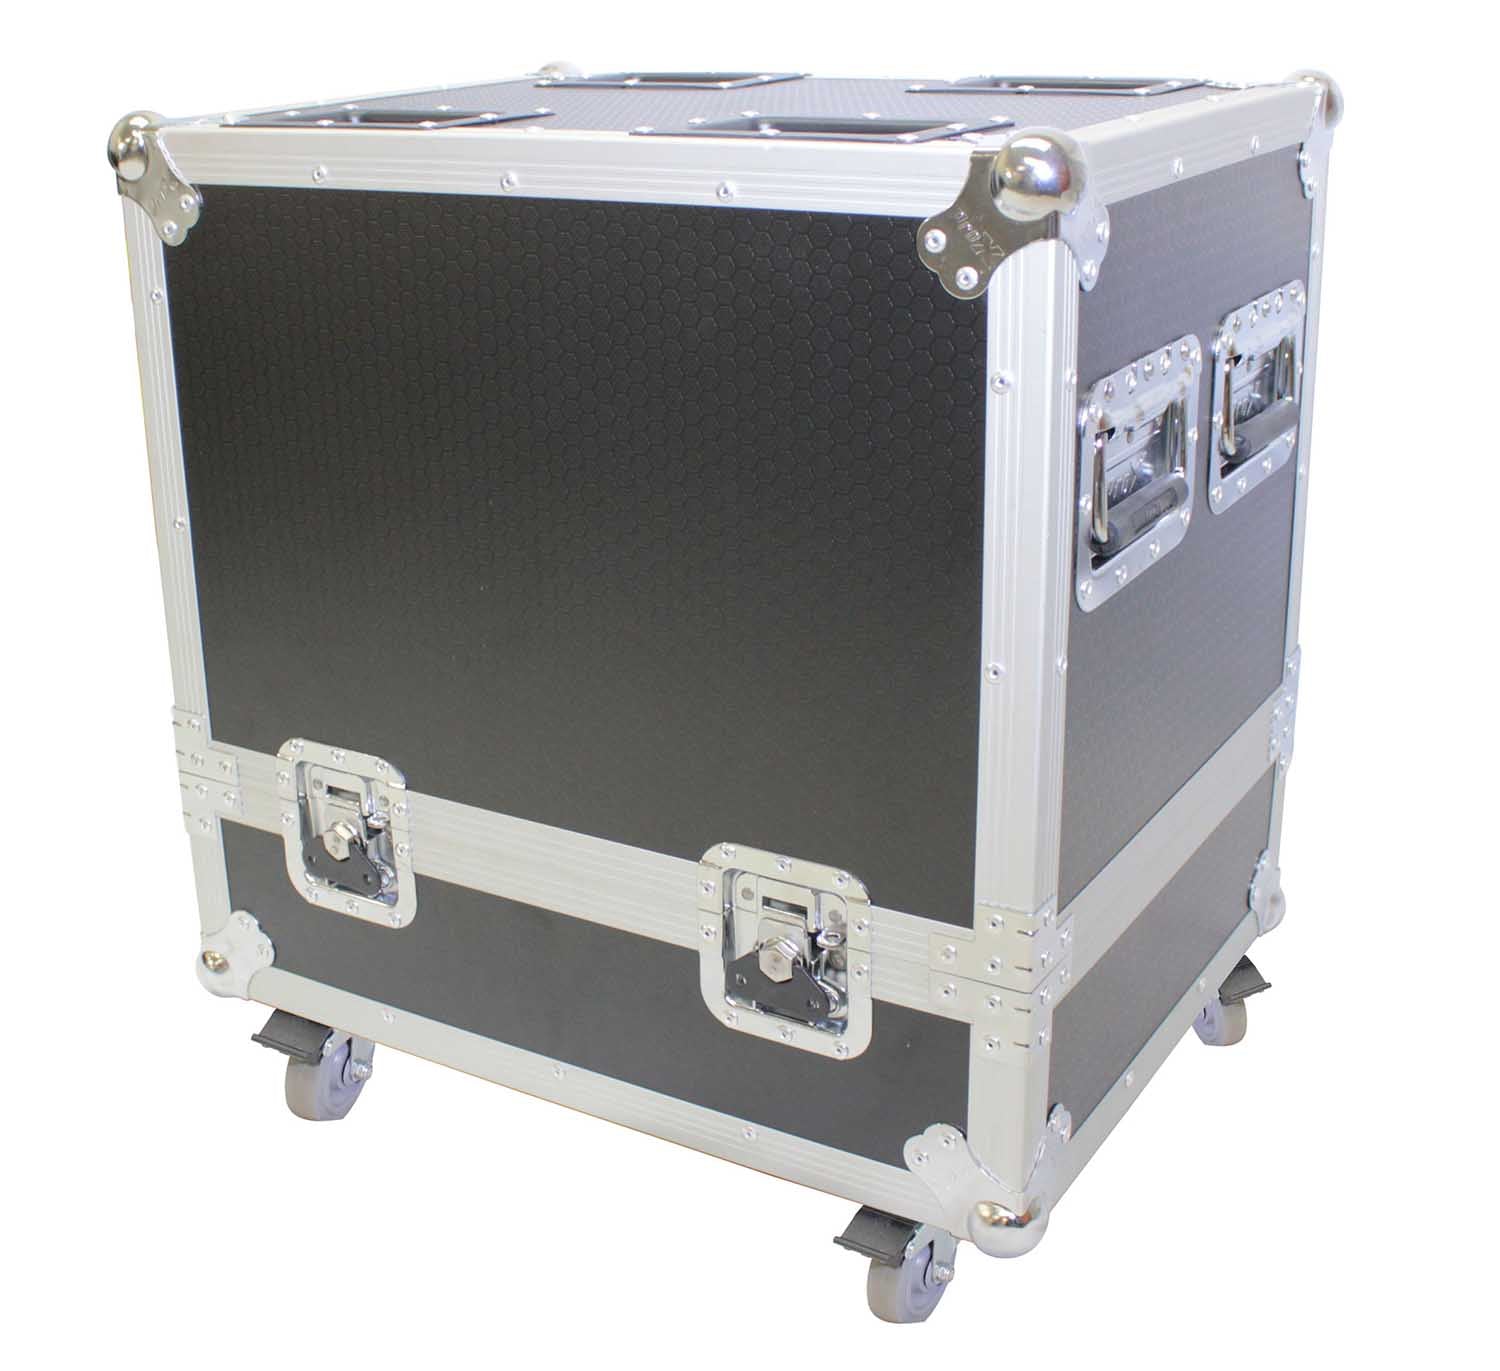 ProX Universal Dual ATA-Style Speaker Flight Case for 15 Speakers (Black)